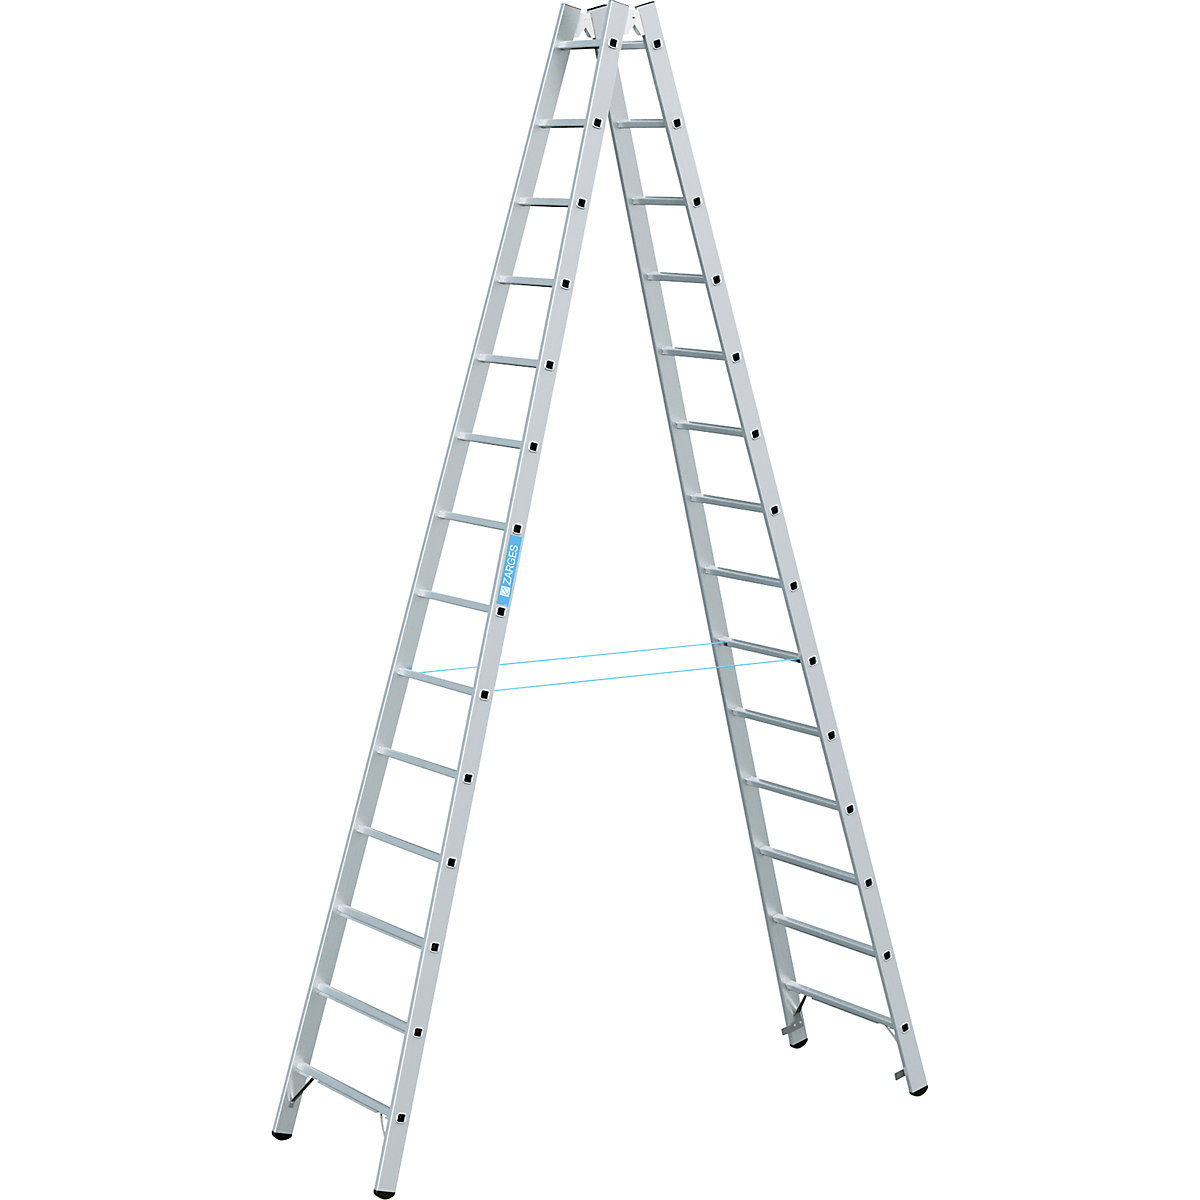 Professional rung ladder – ZARGES